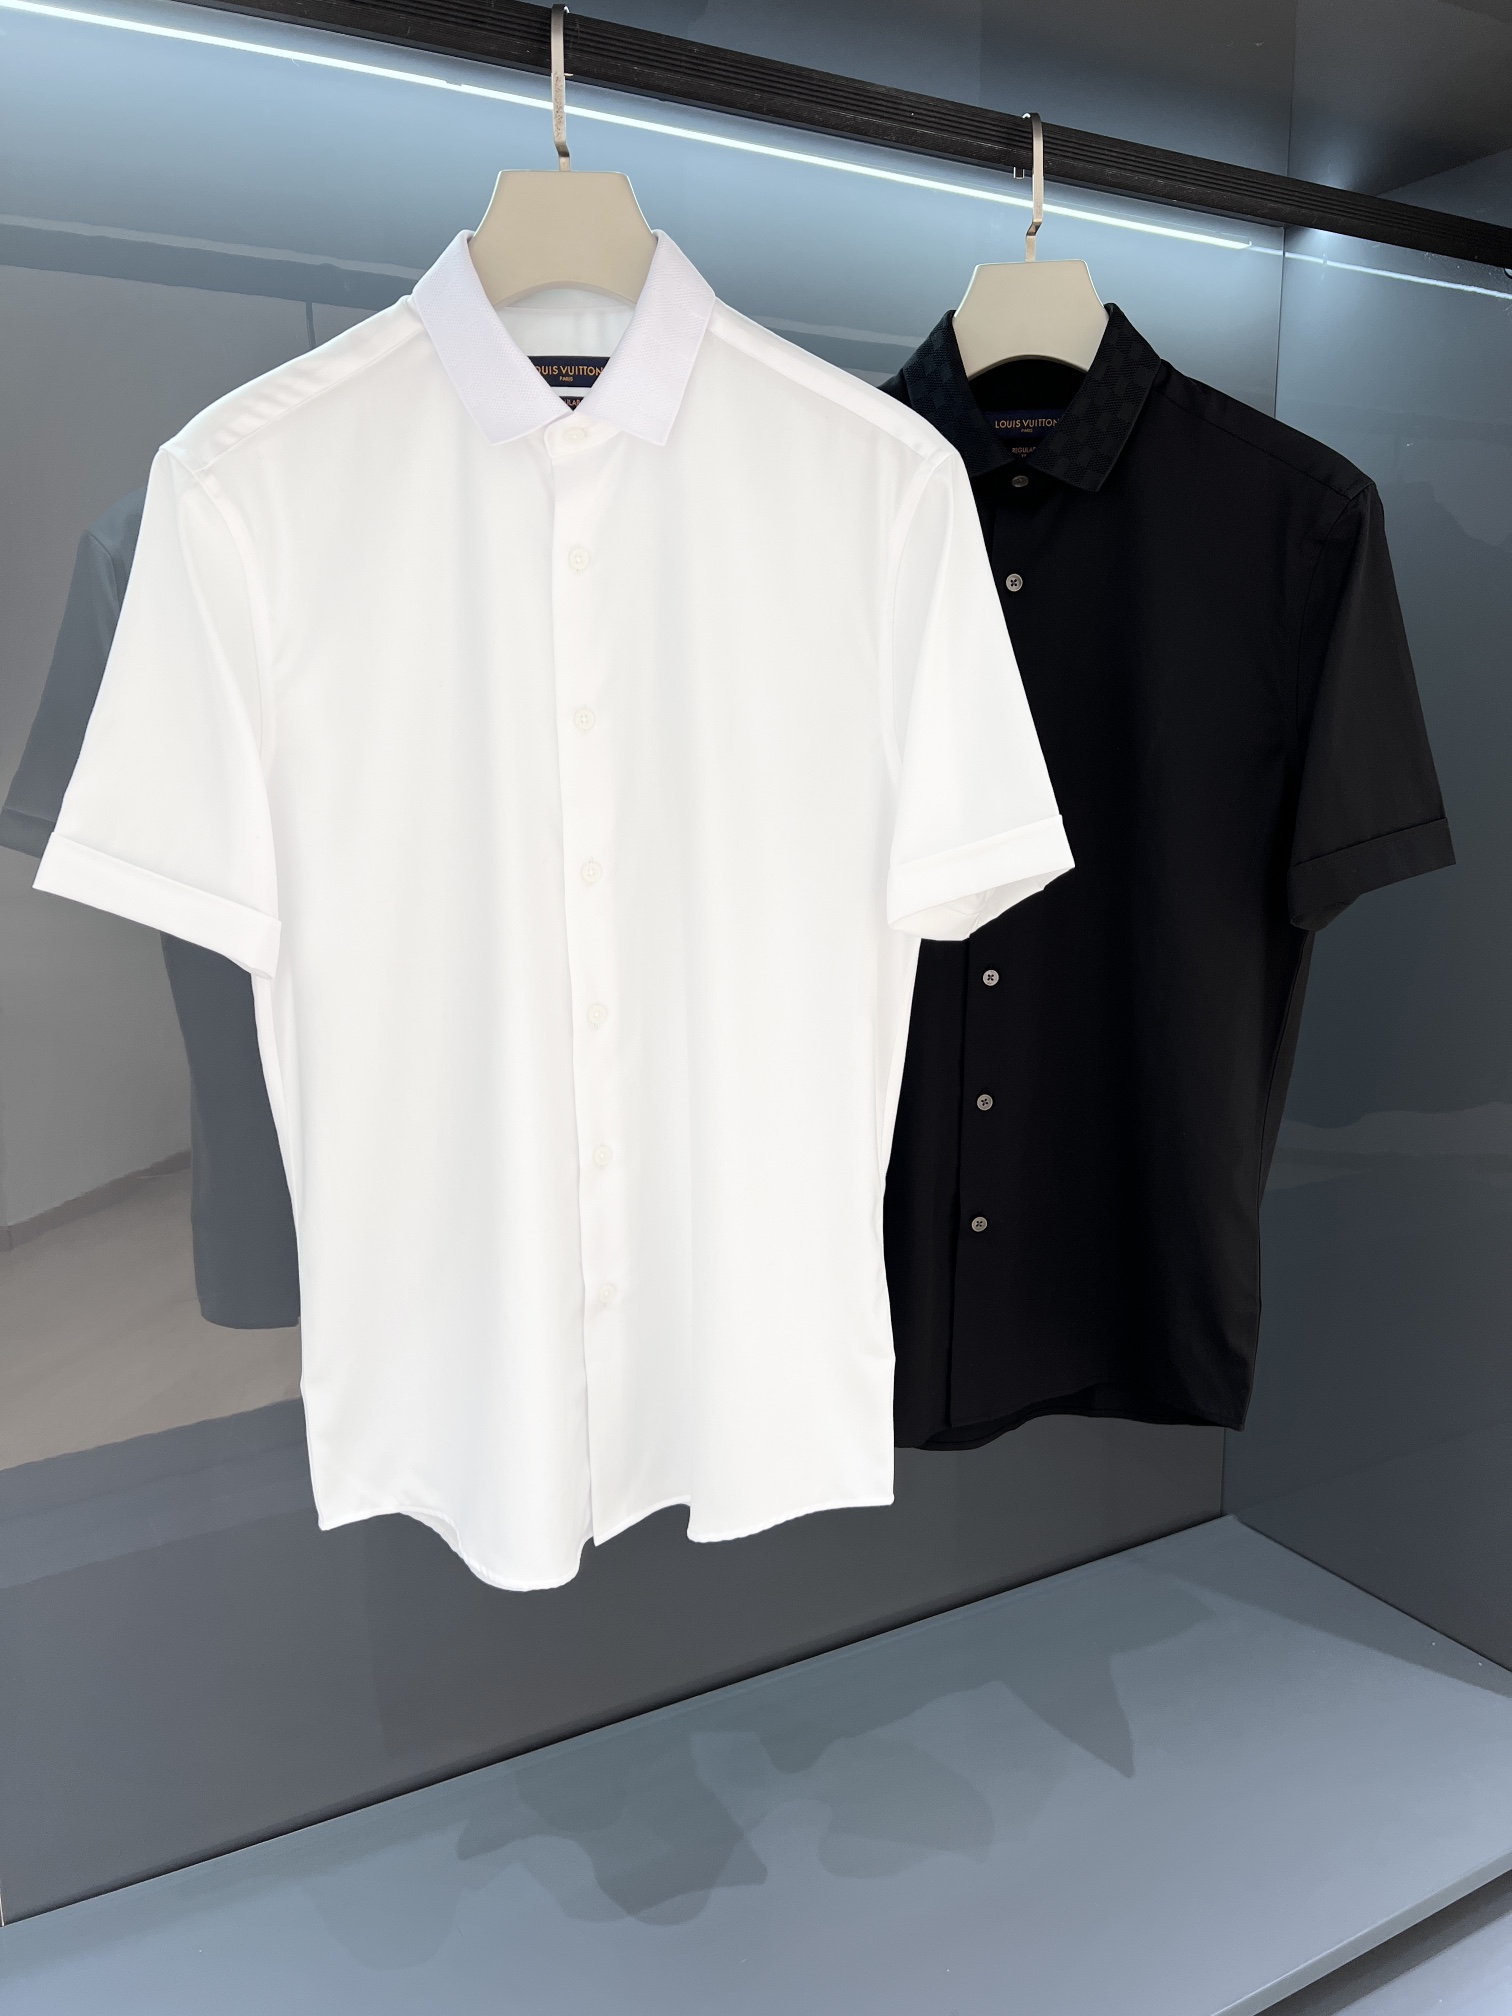 Louis Vuitton Clothing Knit Sweater Shirts & Blouses T-Shirt Black White Men Cotton Knitting Poplin Fabric Spring/Summer Collection Fashion Short Sleeve